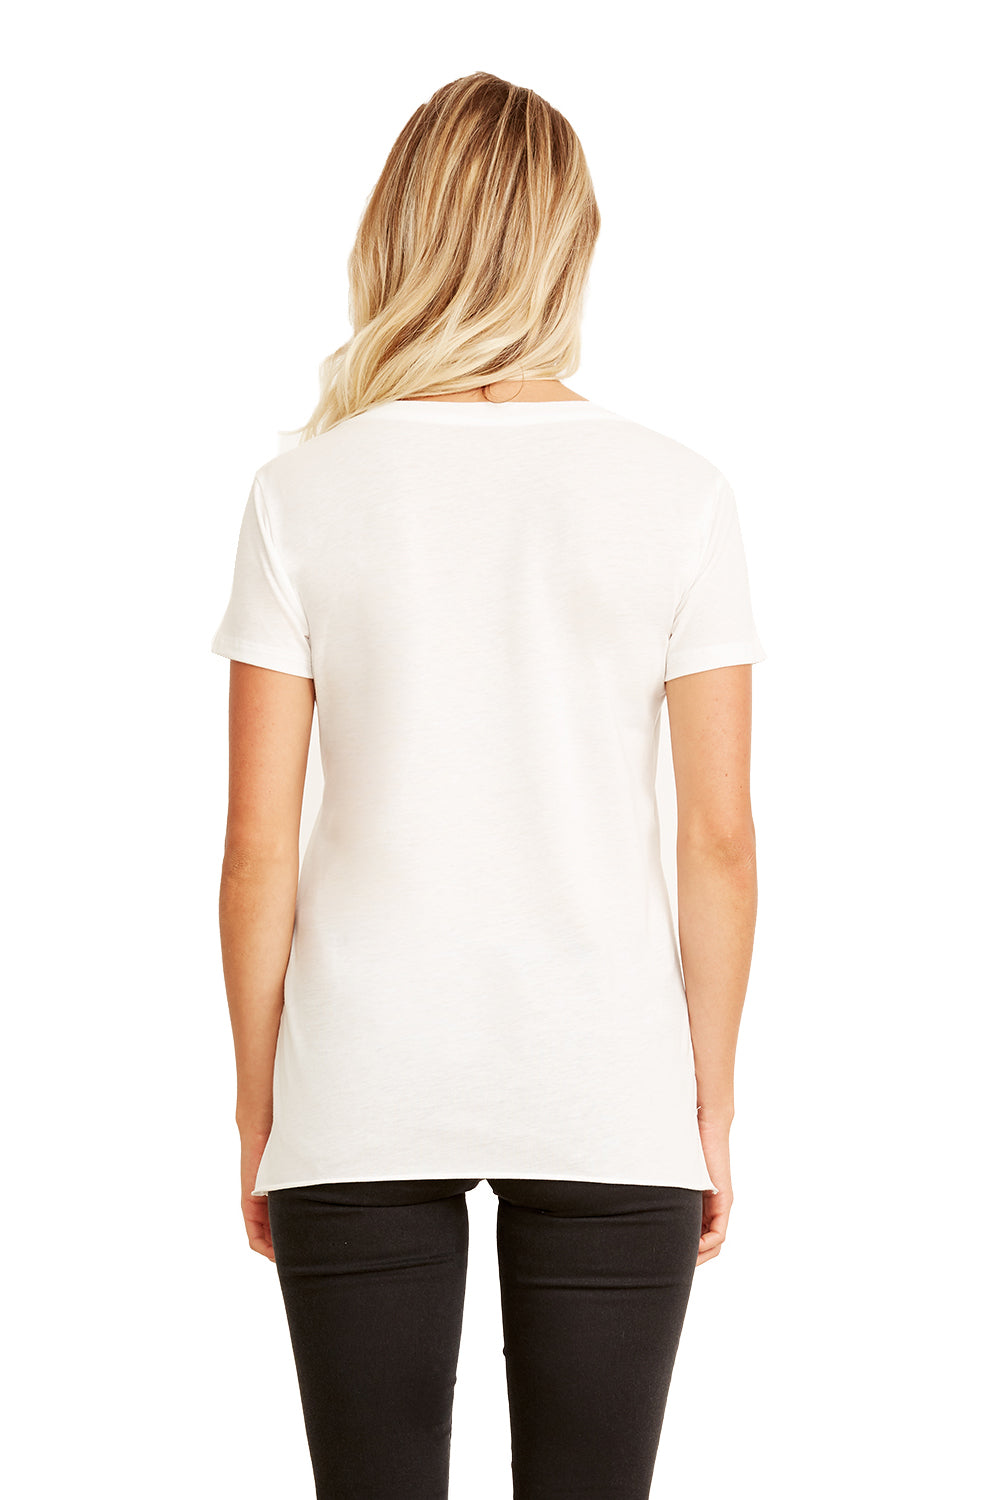 Next Level 5030 Womens Festival Short Sleeve Crewneck T-Shirt White Back